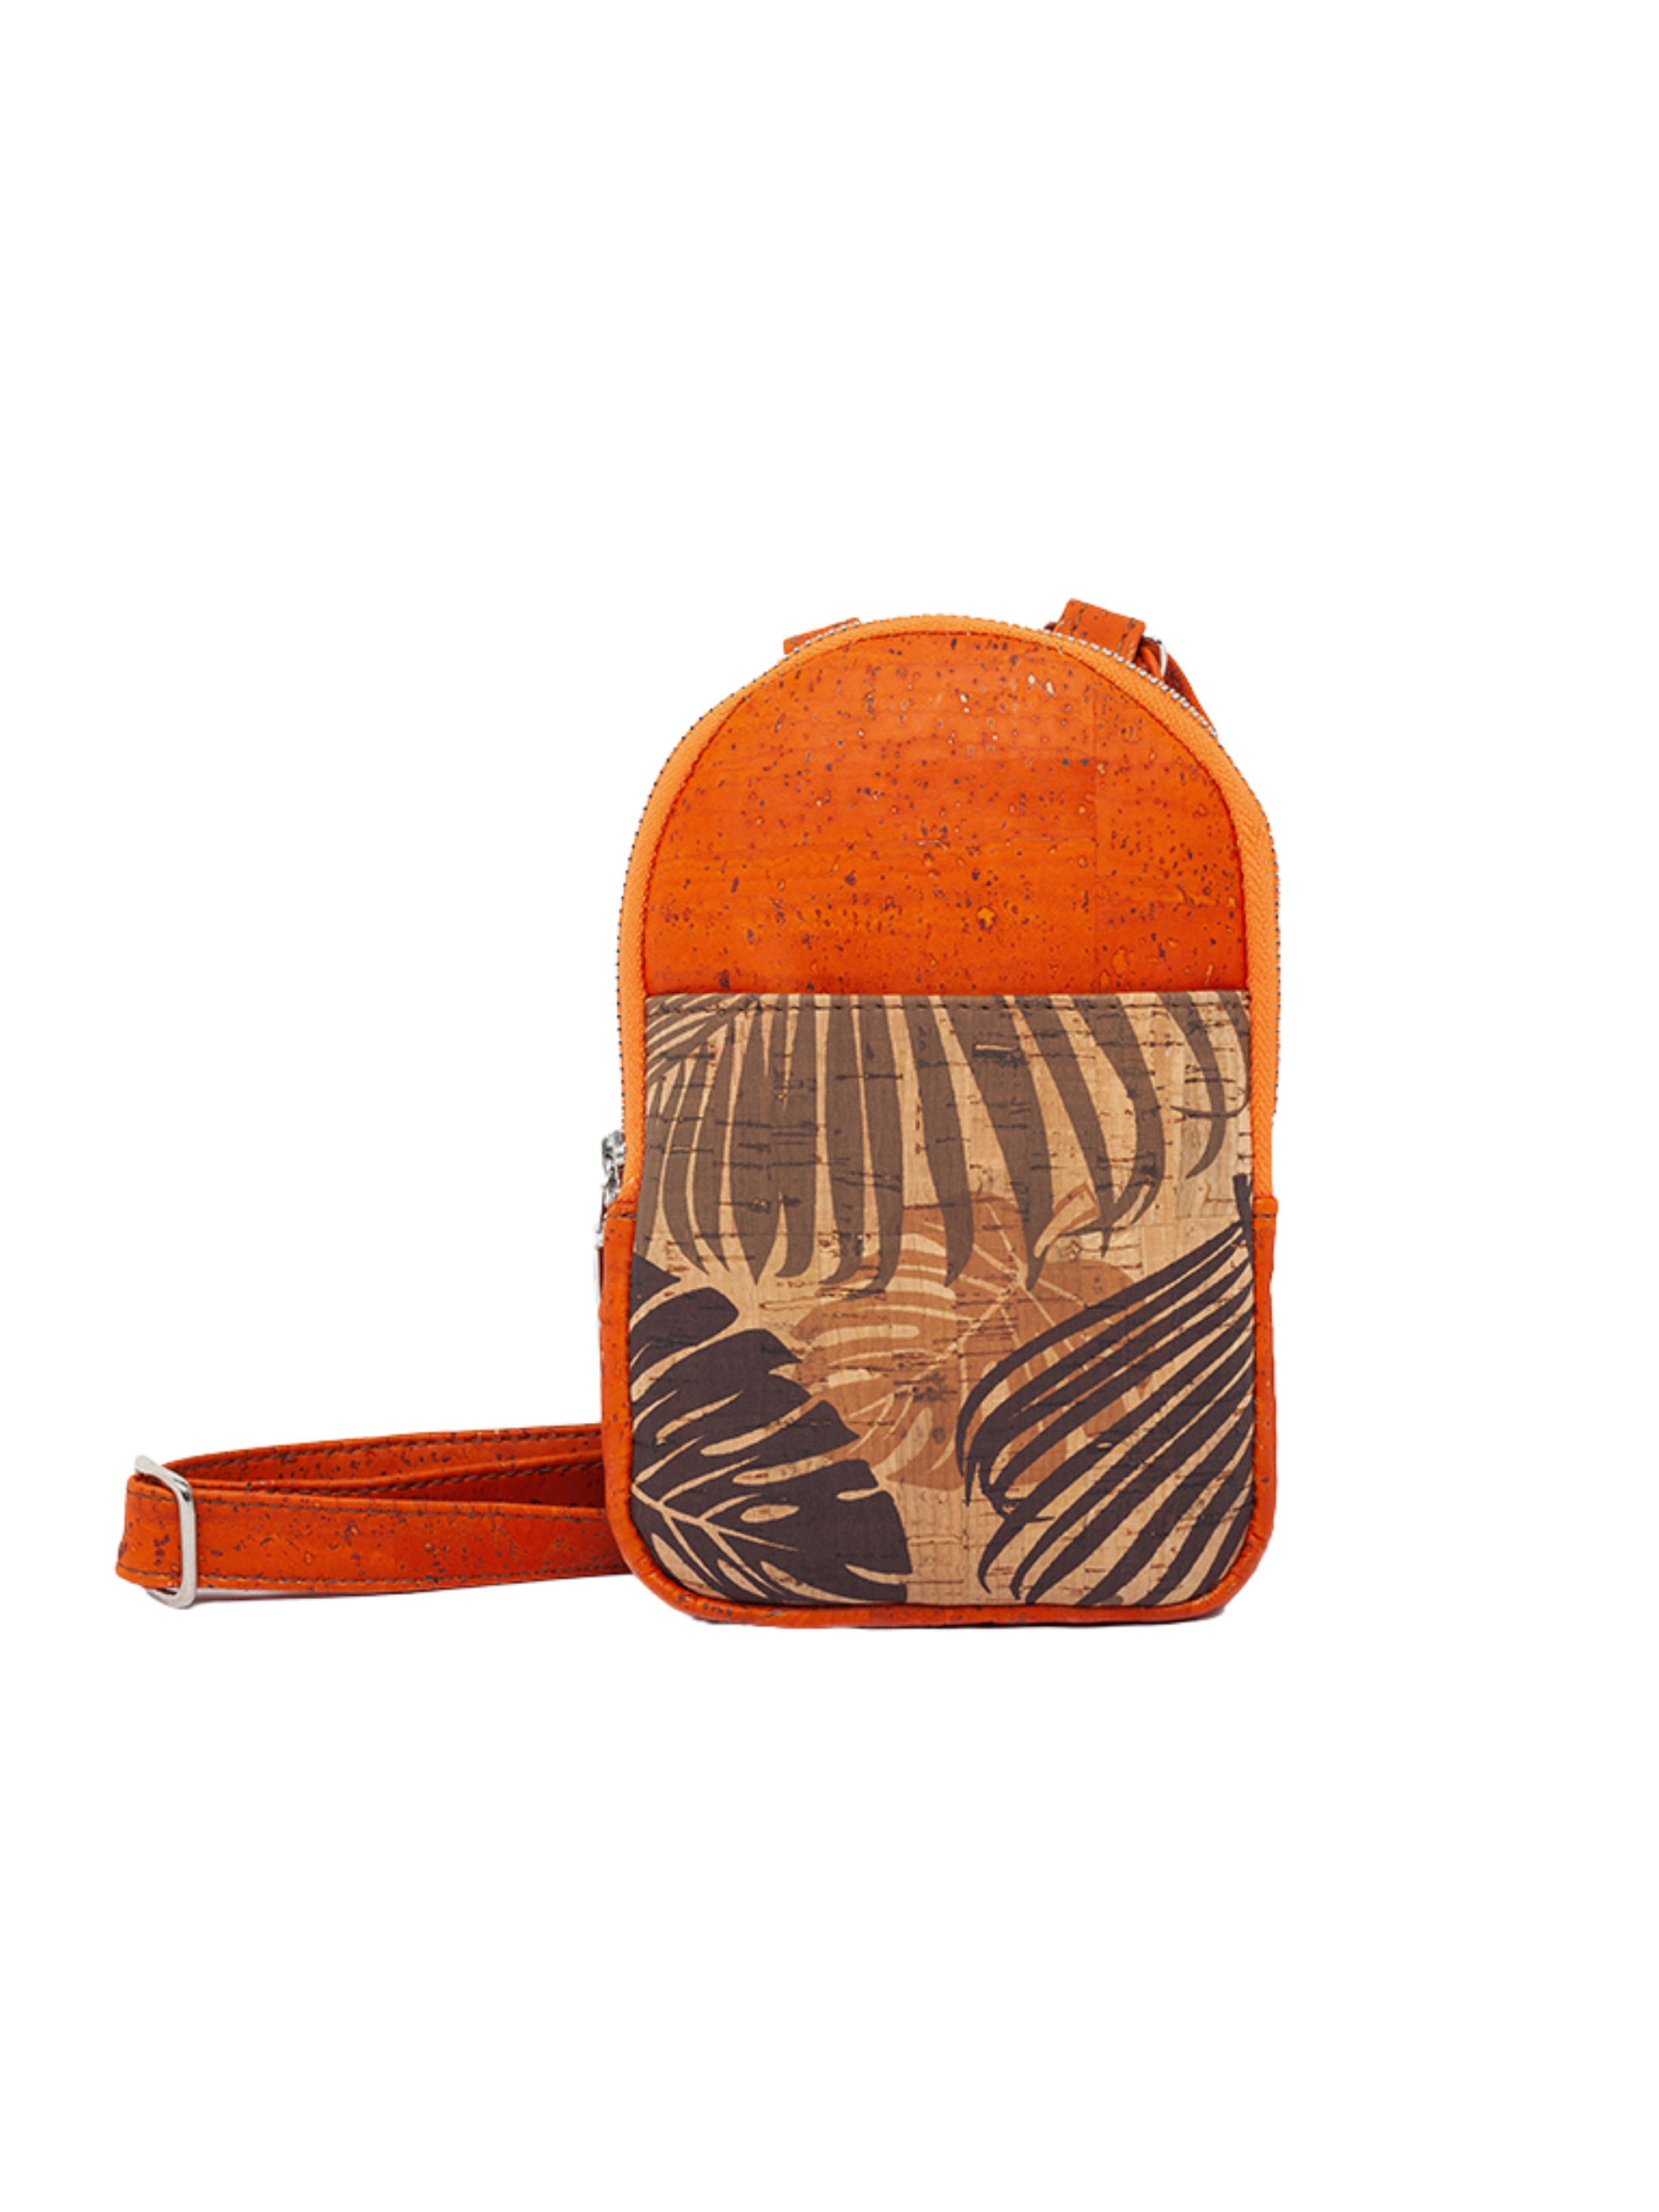 #color_ Orange with Pattern | Artelusa Cork Crossbody Bag - Orange with Pattern - 4071.68.13-SB32